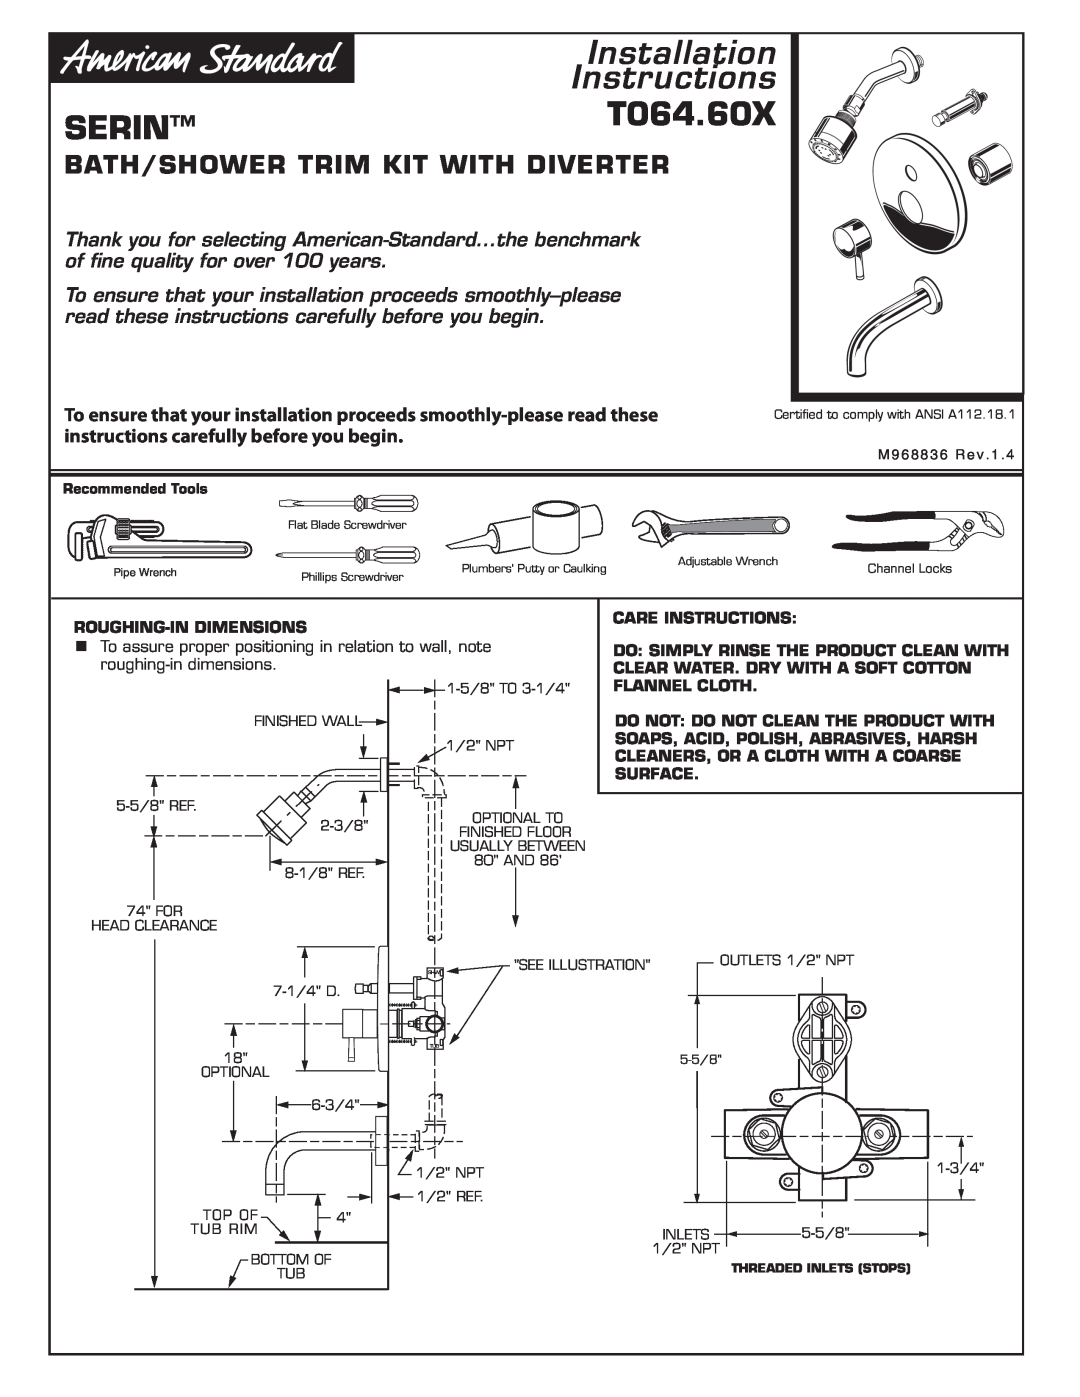 American Standard T064.60X manual 